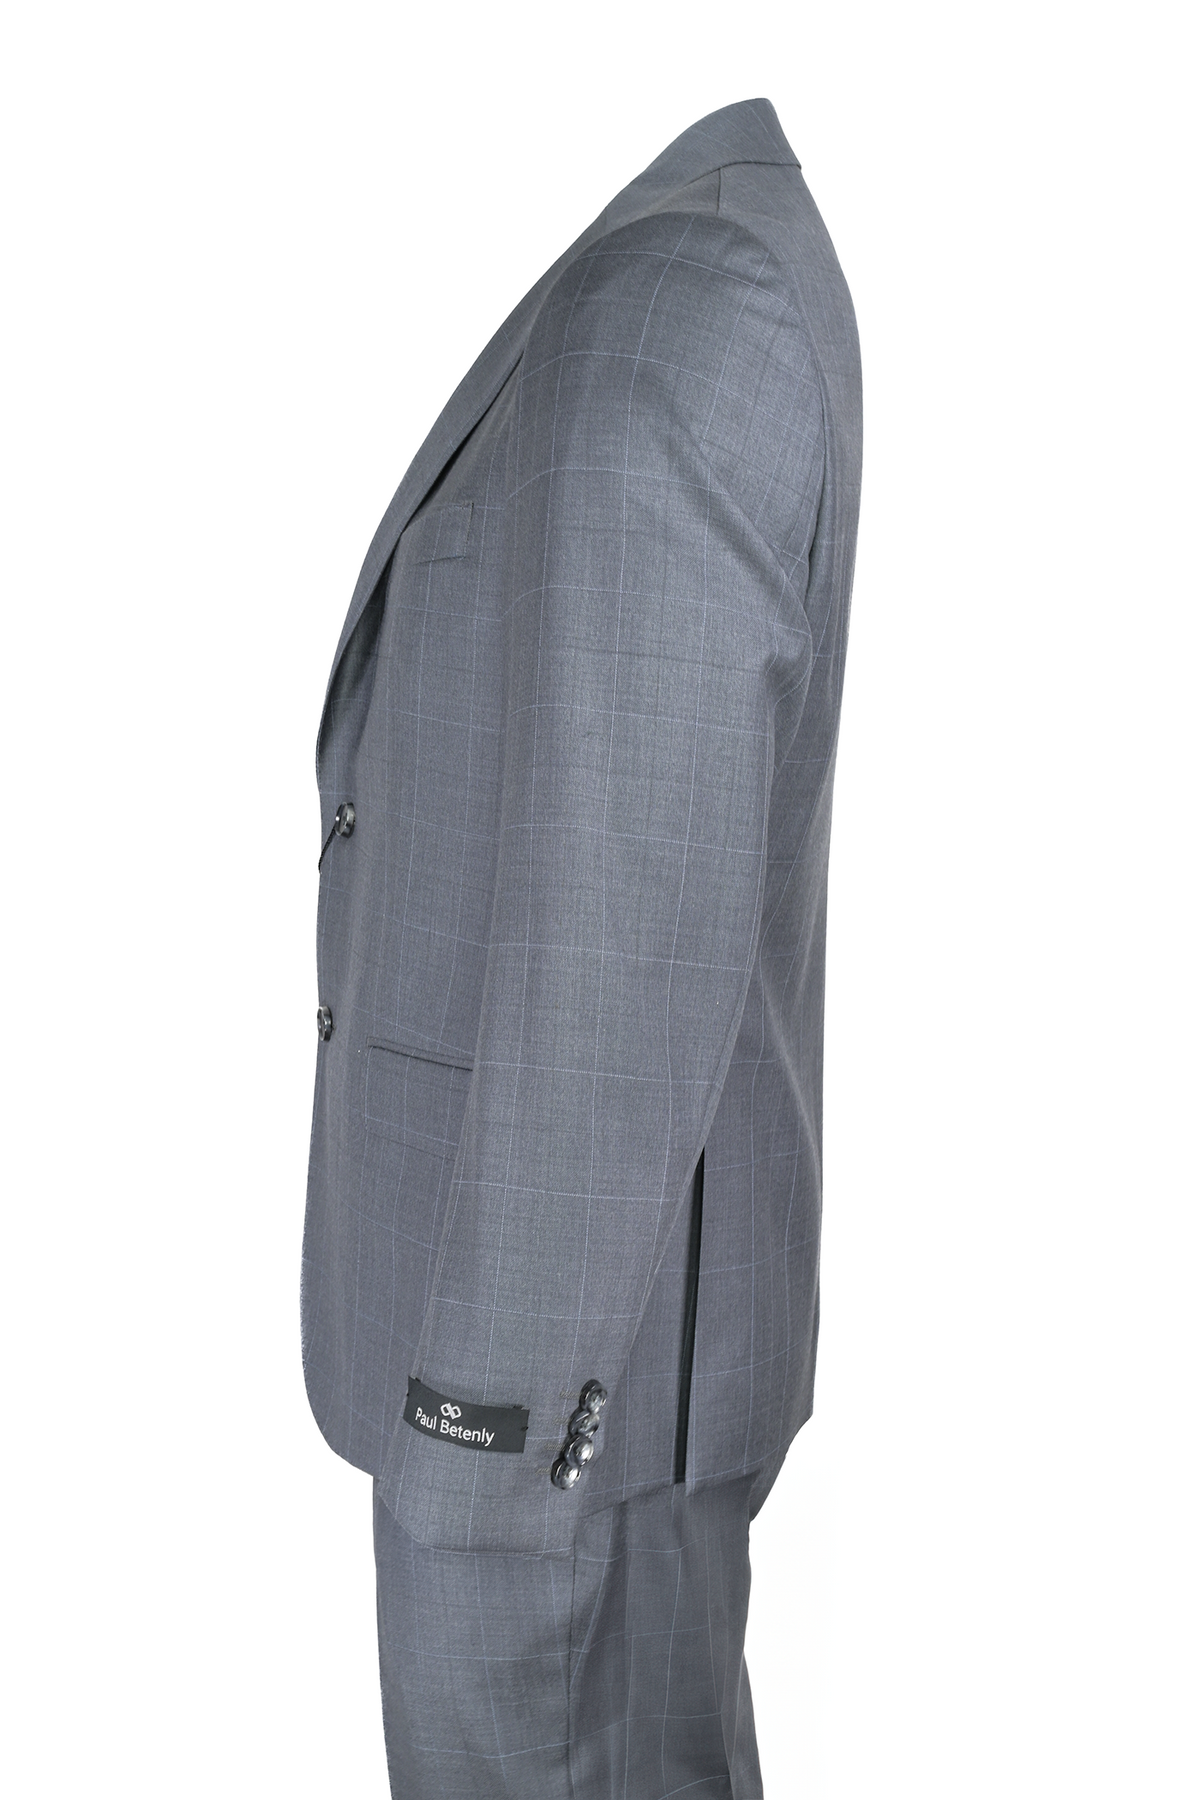 Paul Betenly Windowpane Suit Grey